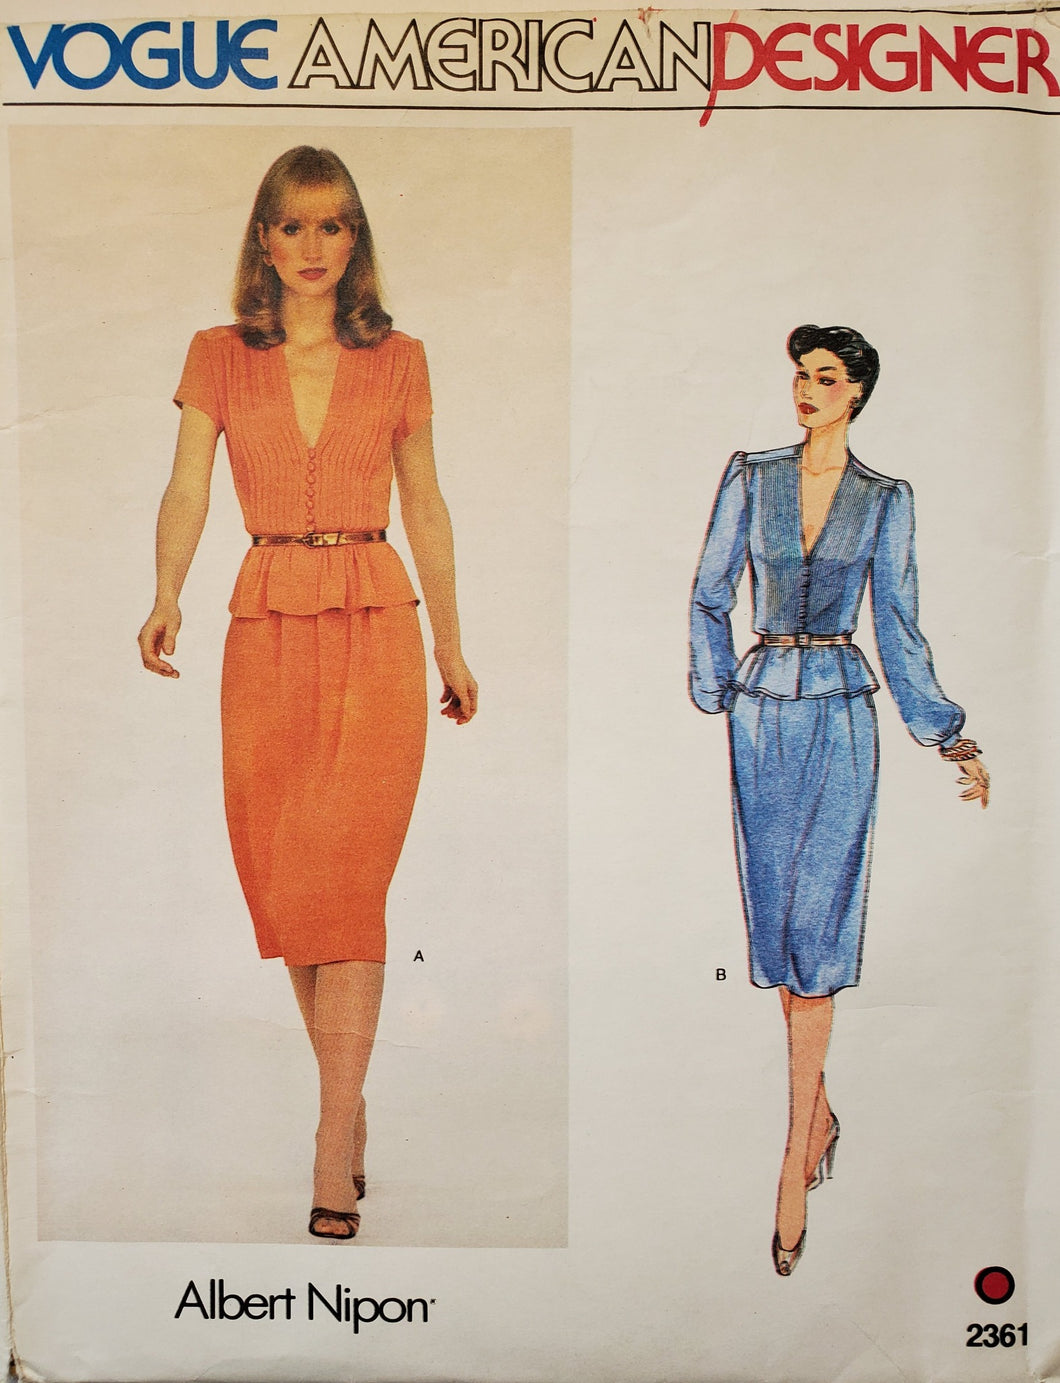 Vogue Pattern 2361, UNCUT, Vogue American Designer Albert Nipon Vogue Skirt and Top Size 8, Vintage